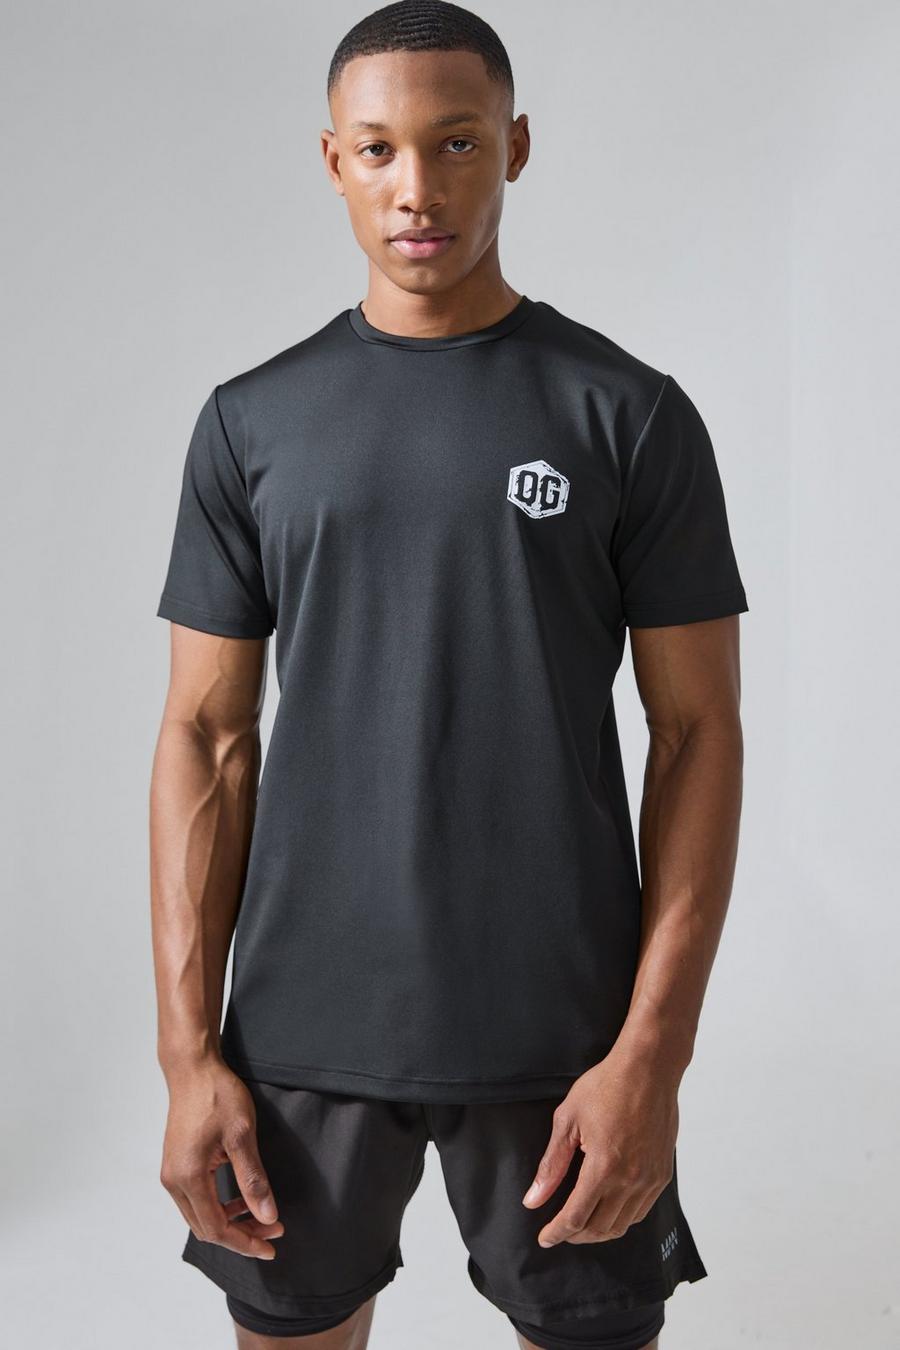 Camiseta MAN Active x OG resistente ajustada para el gimnasio, Black